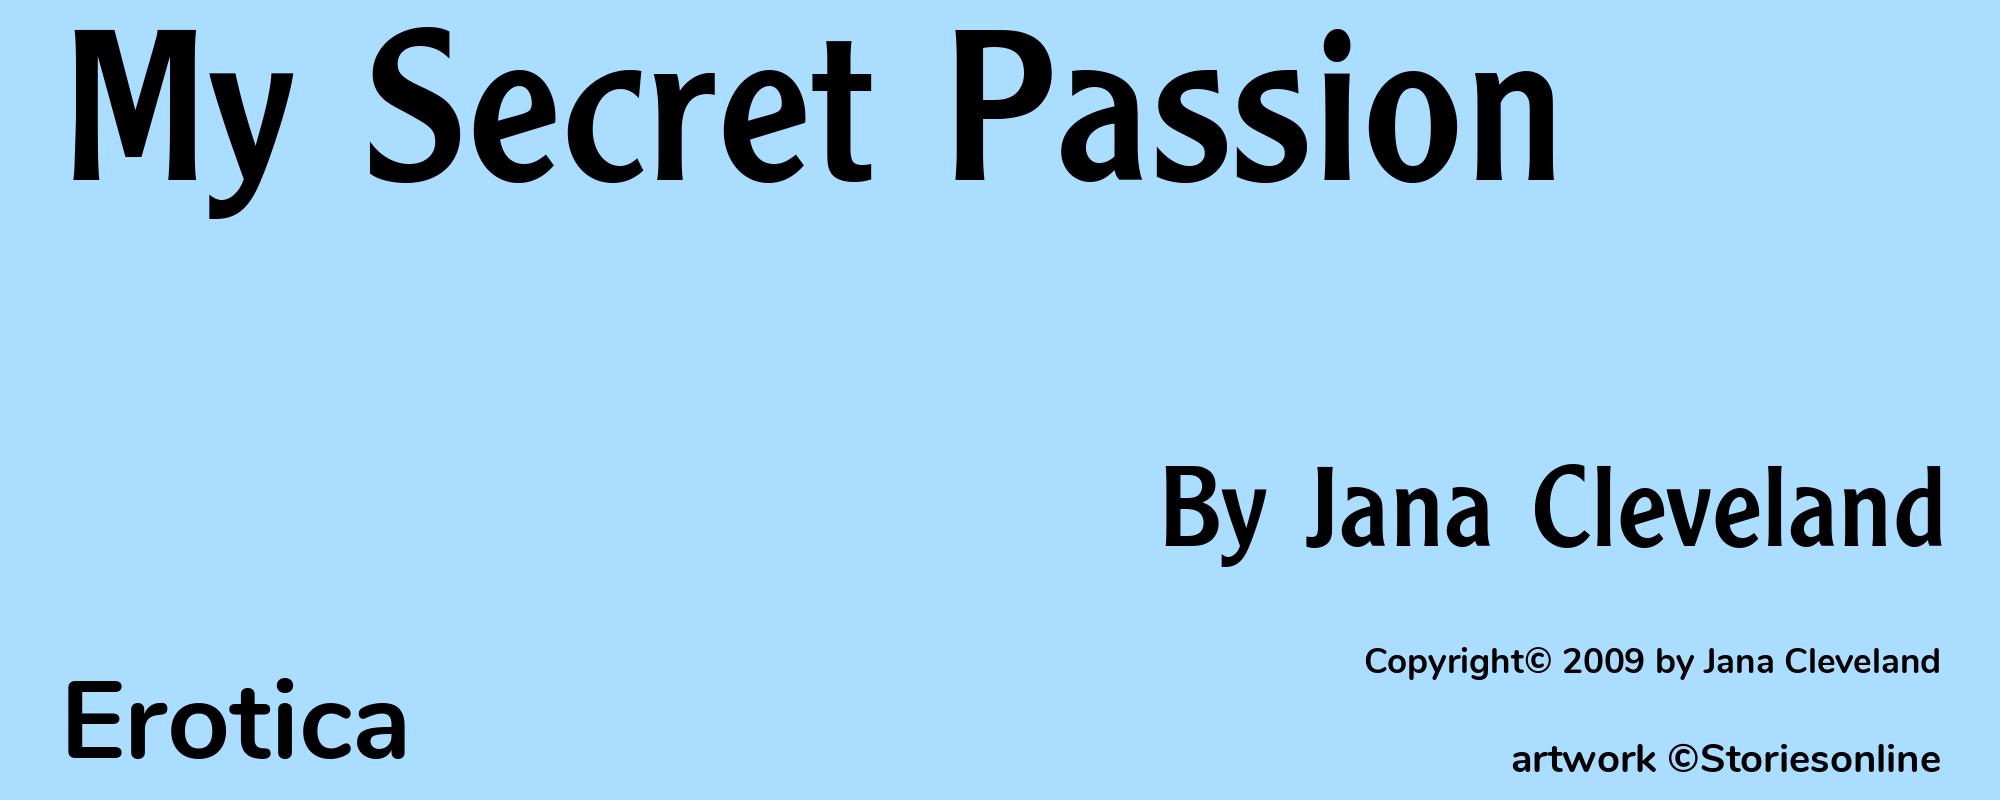 My Secret Passion - Cover